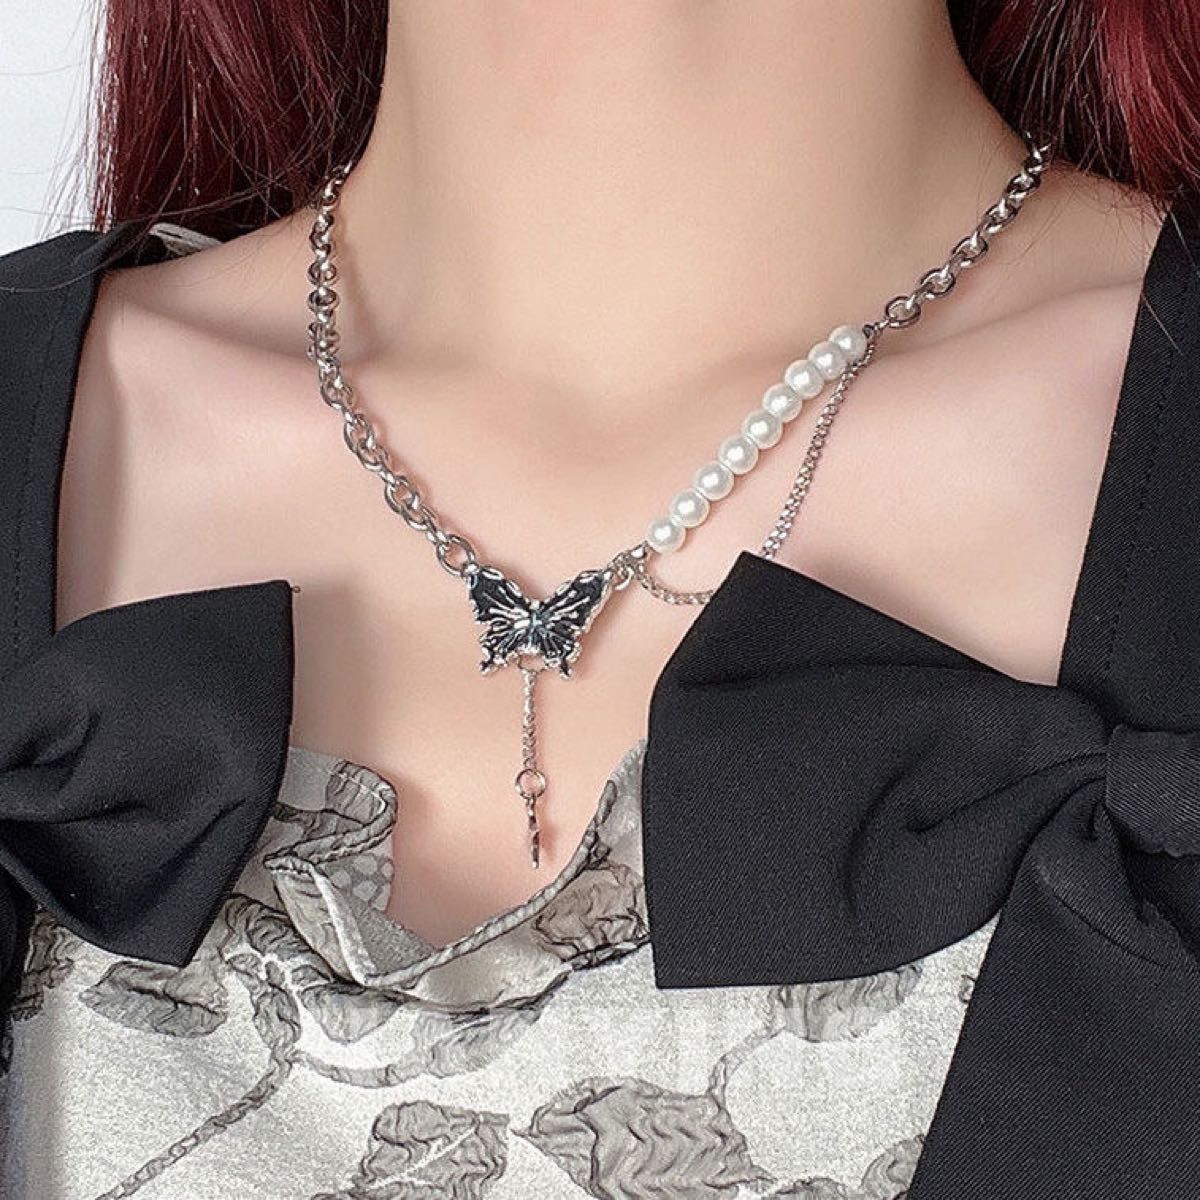 Mamey Jewelry 非対称、真珠、蝶ネックレス、2024新型、女性、高級デザイン感、ins、軽奢、小衆鎖骨チェーン